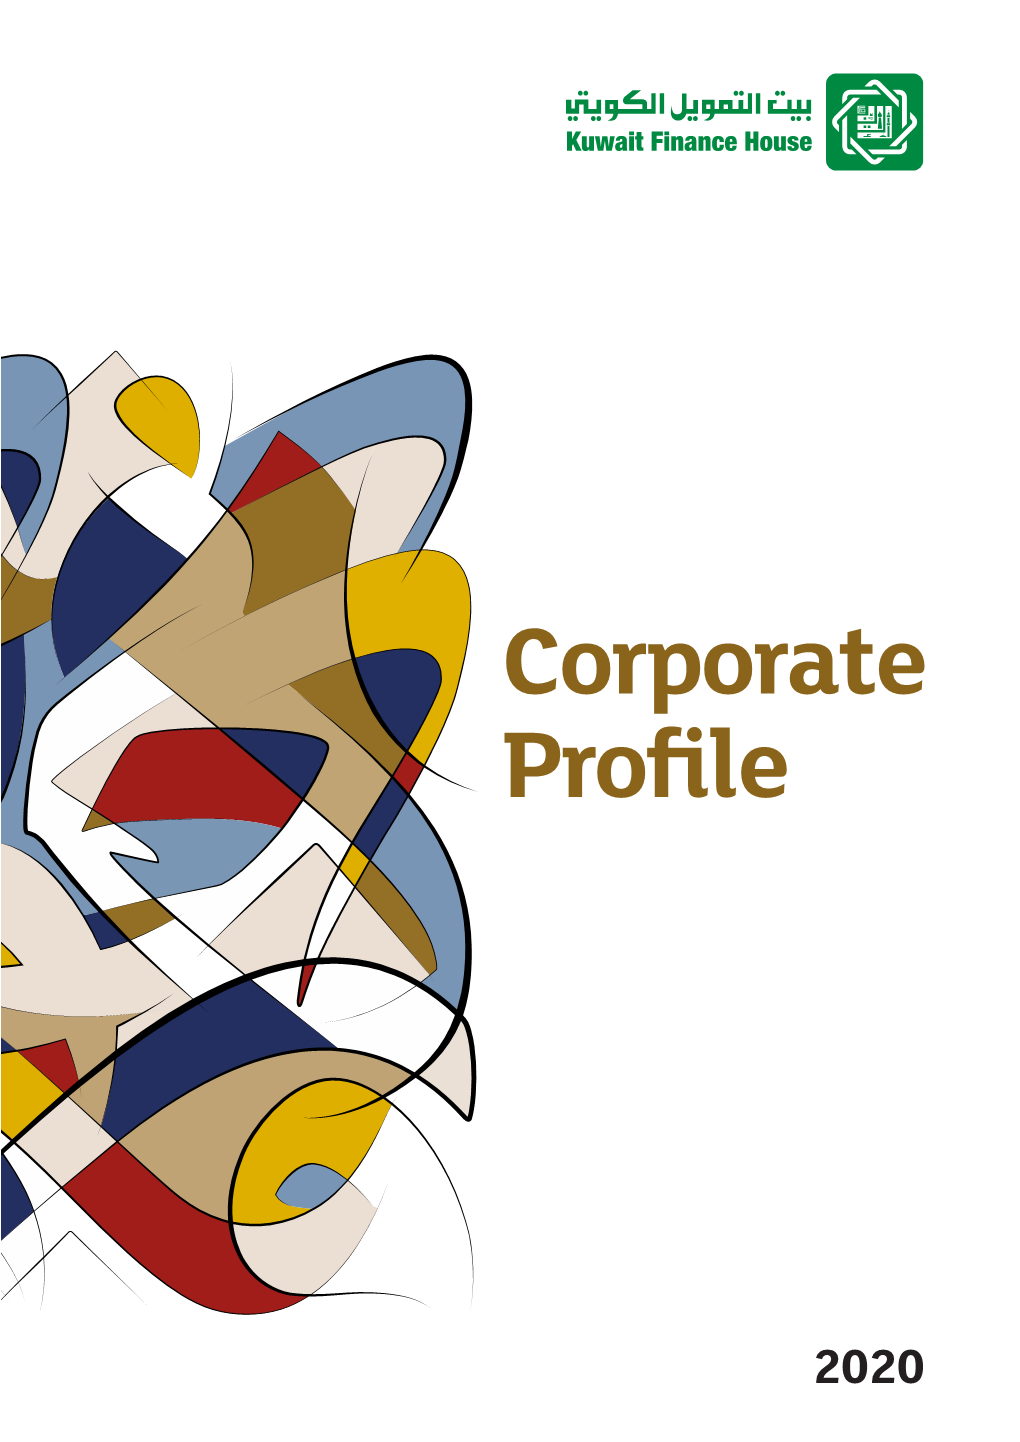 KFH Corporate Profile (En) 2020 14 JUN 21